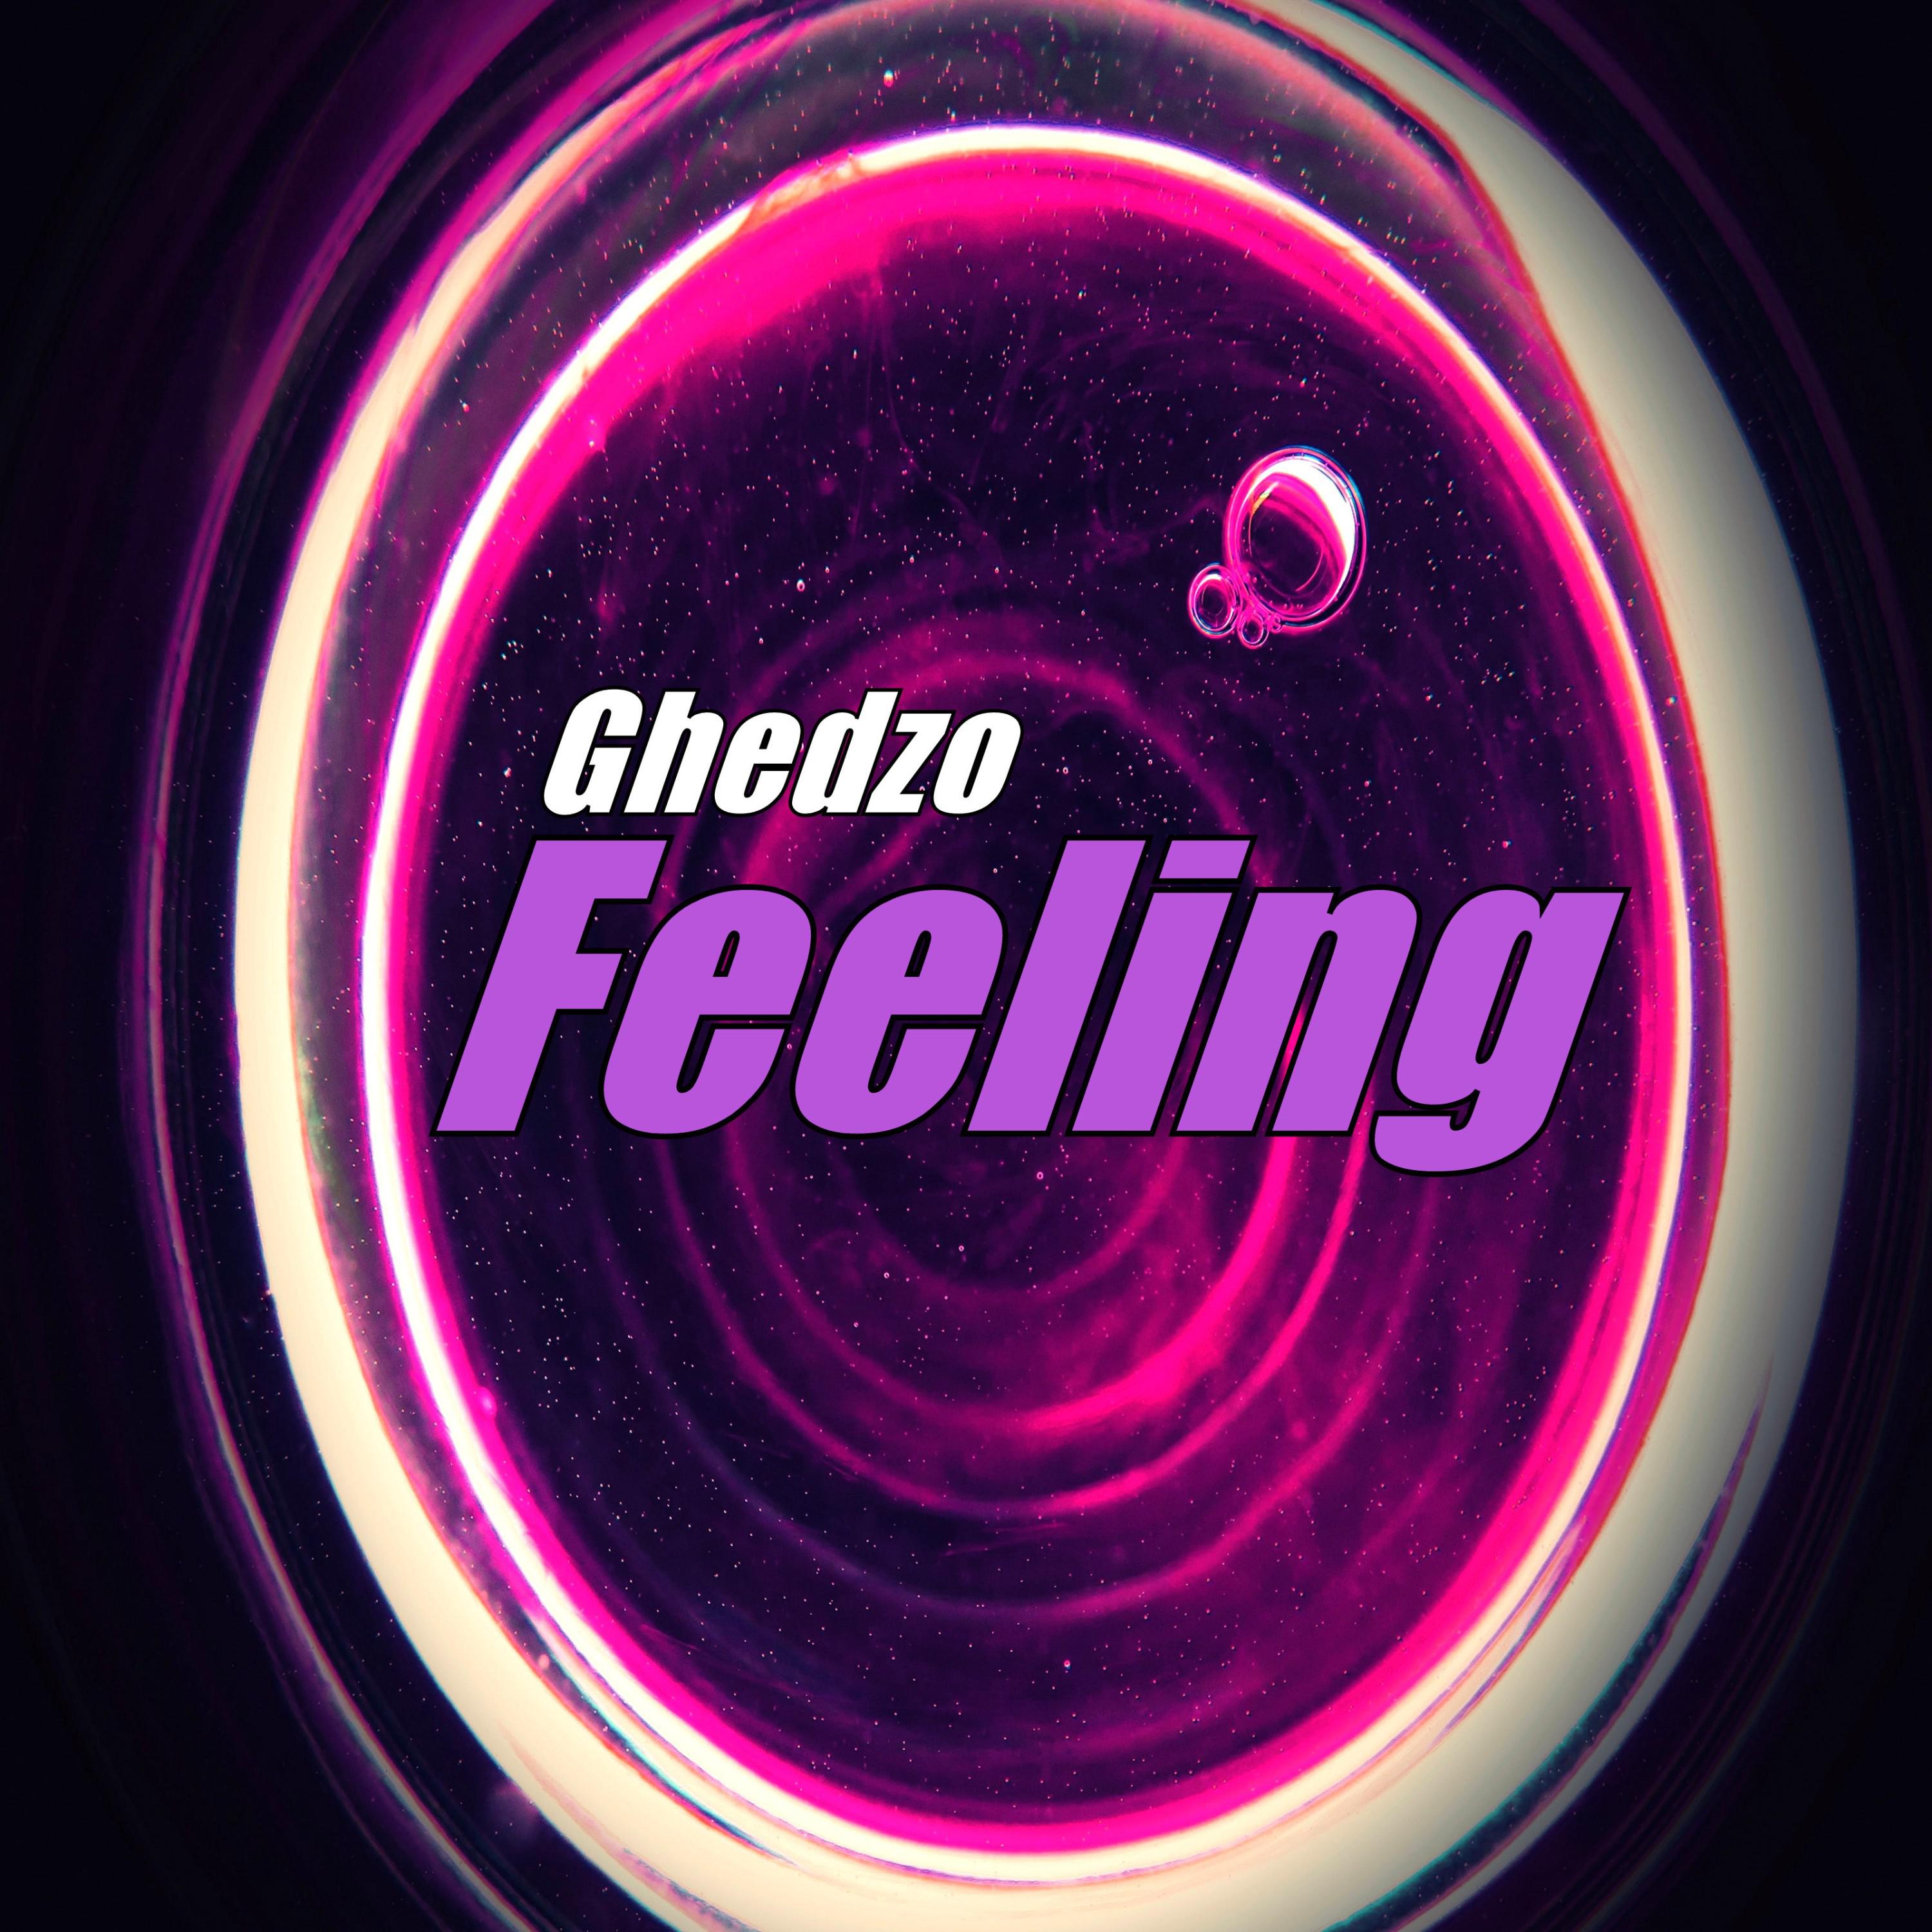 Ghedzo - Such a Feeling